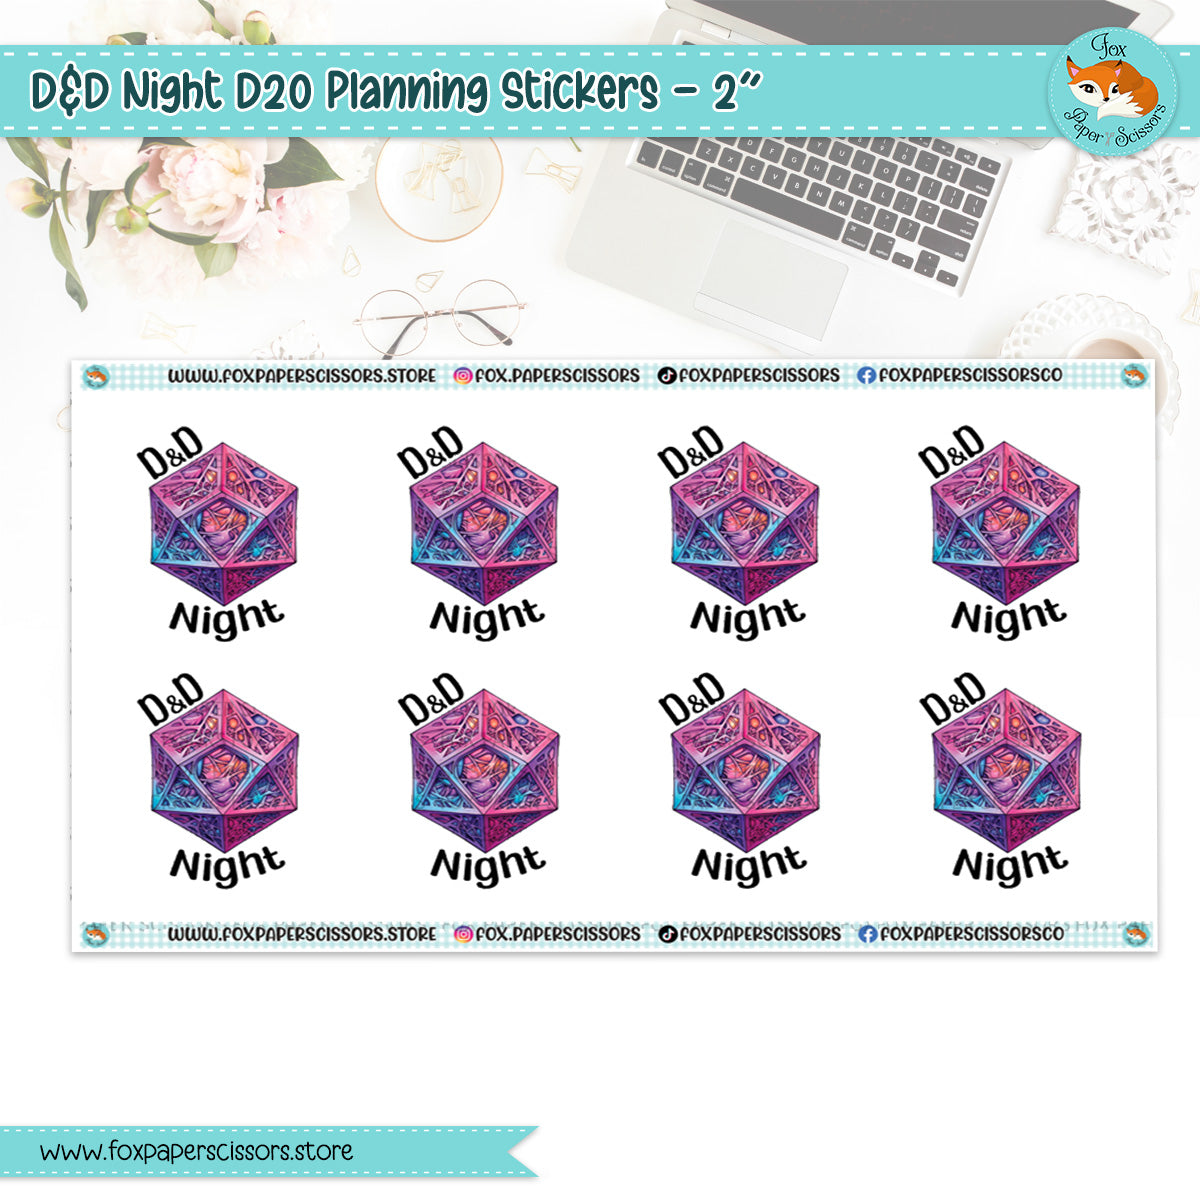 D20 D&D Planning Stickers - 2"